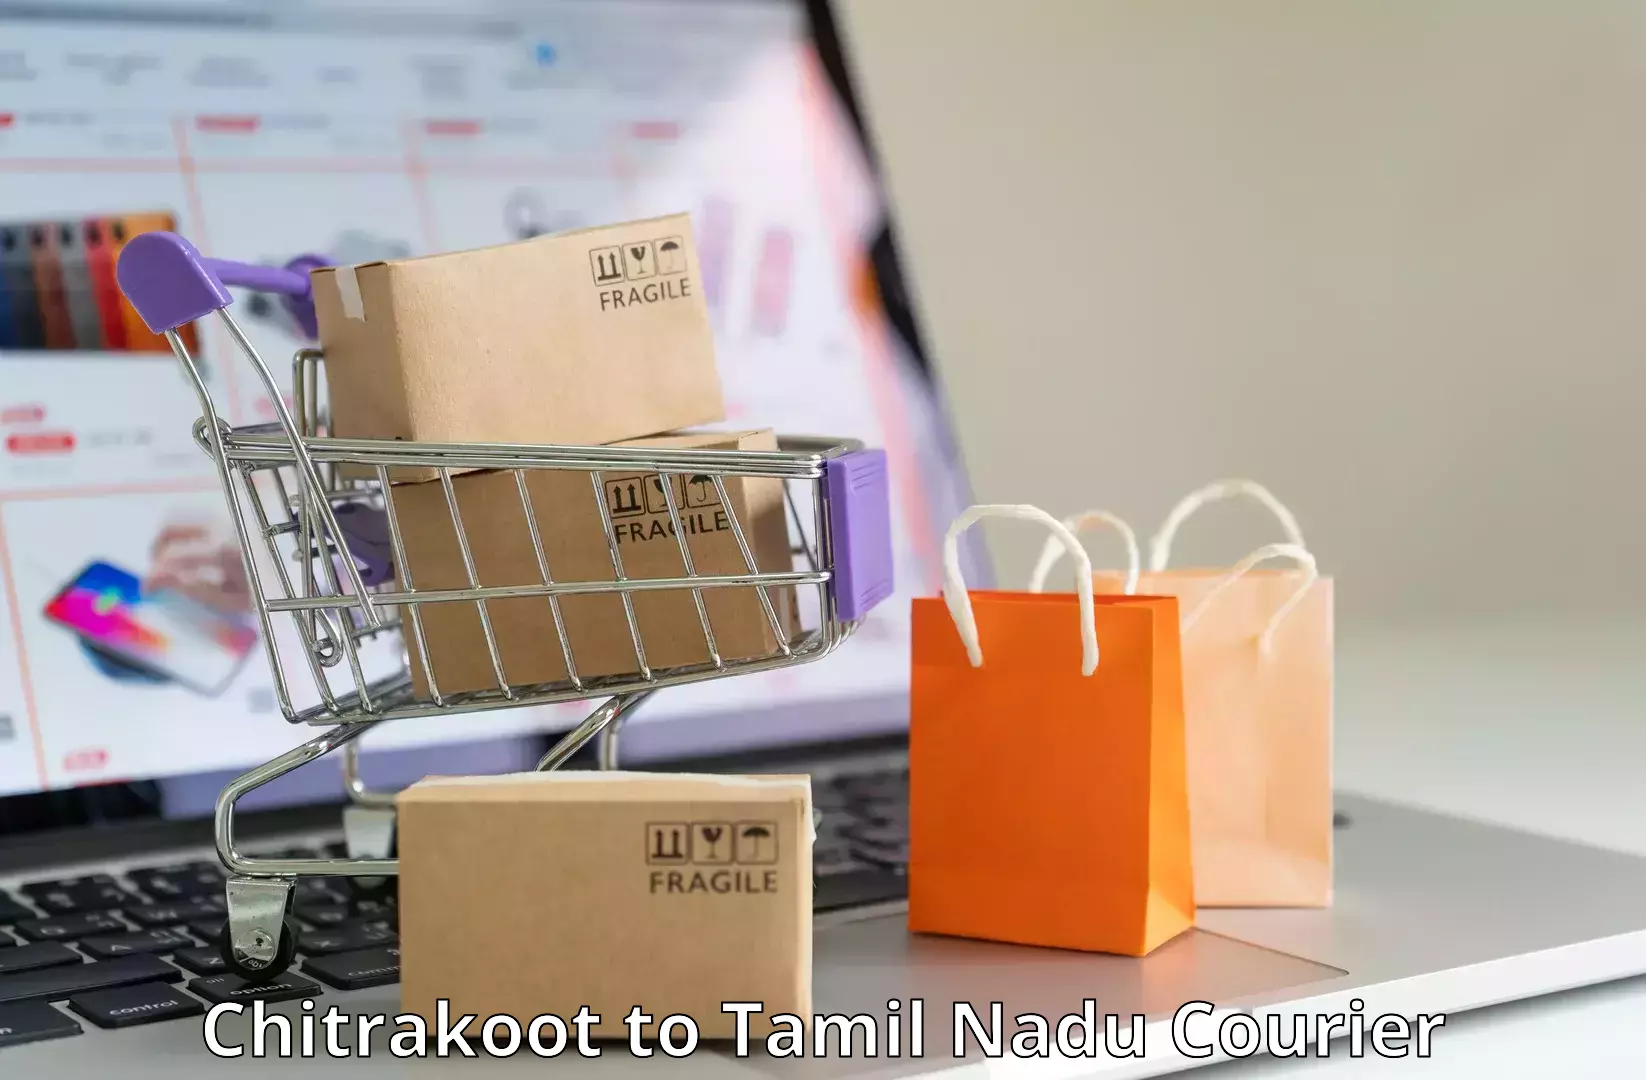 International parcel service Chitrakoot to Gudiyattam